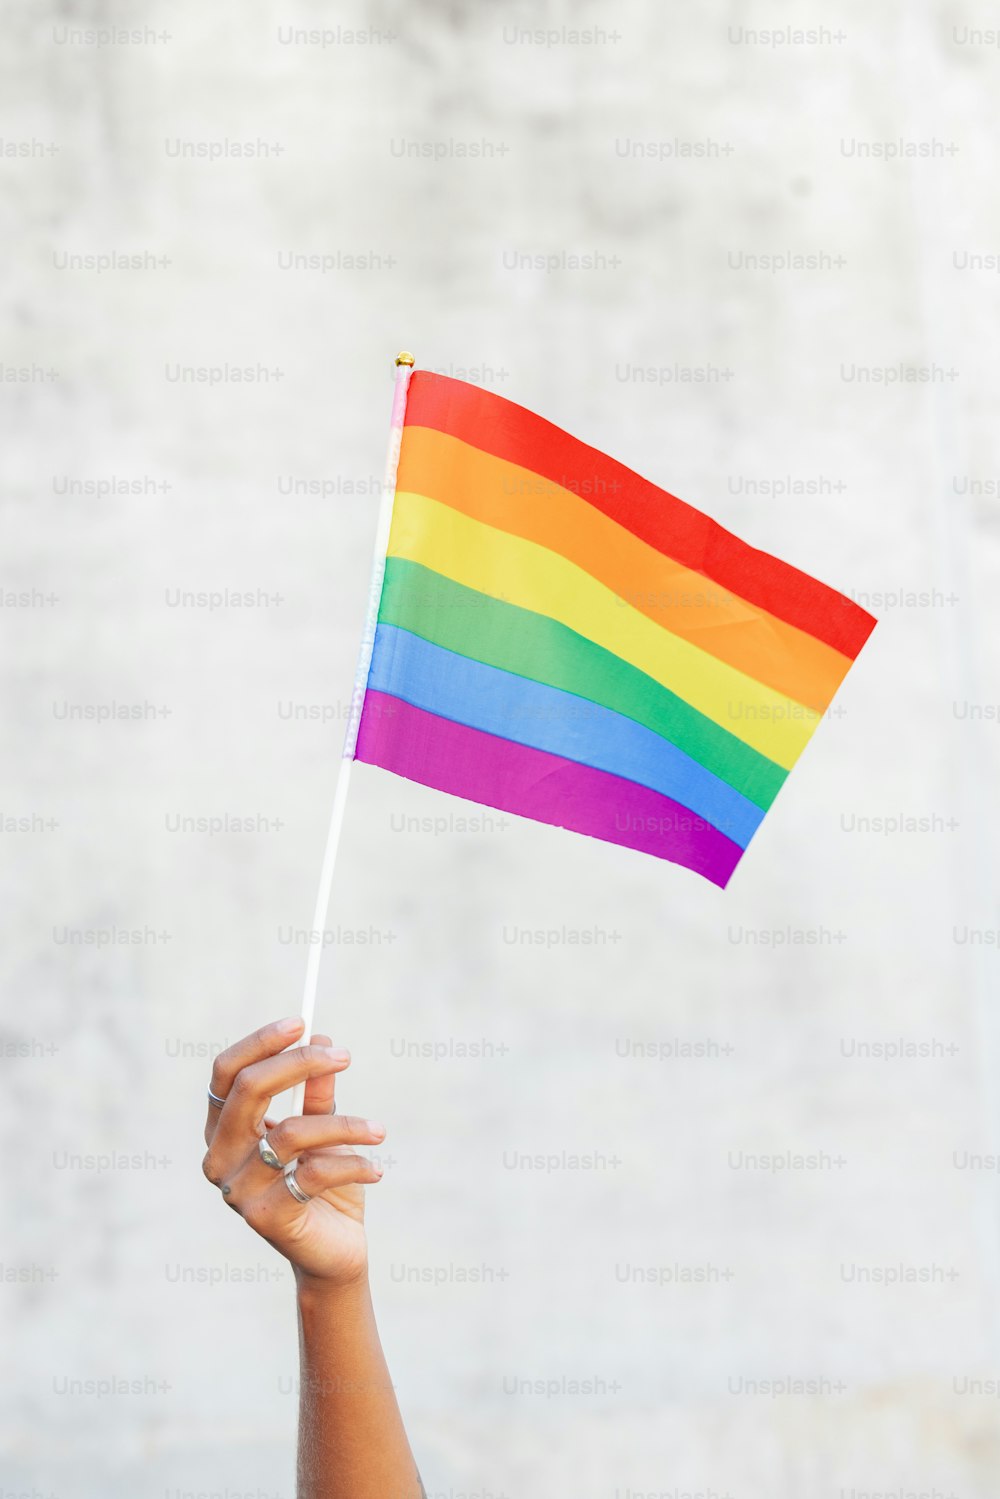 una persona che tiene in mano una bandiera arcobaleno